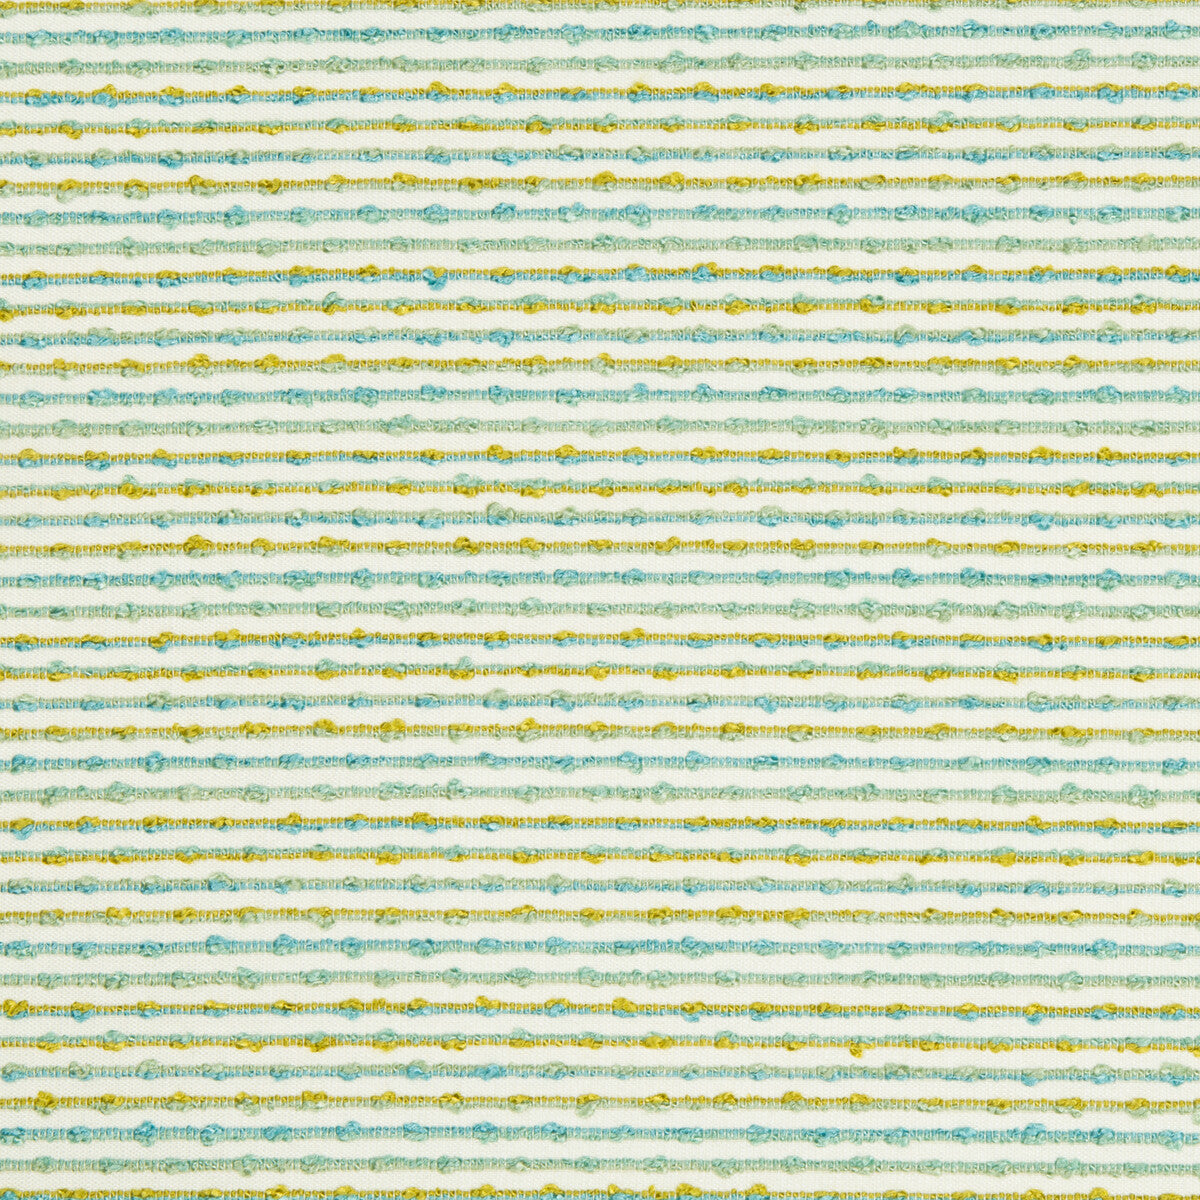 Kravet Design fabric in 34669-1523 color - pattern 34669.1523.0 - by Kravet Design in the Gis collection